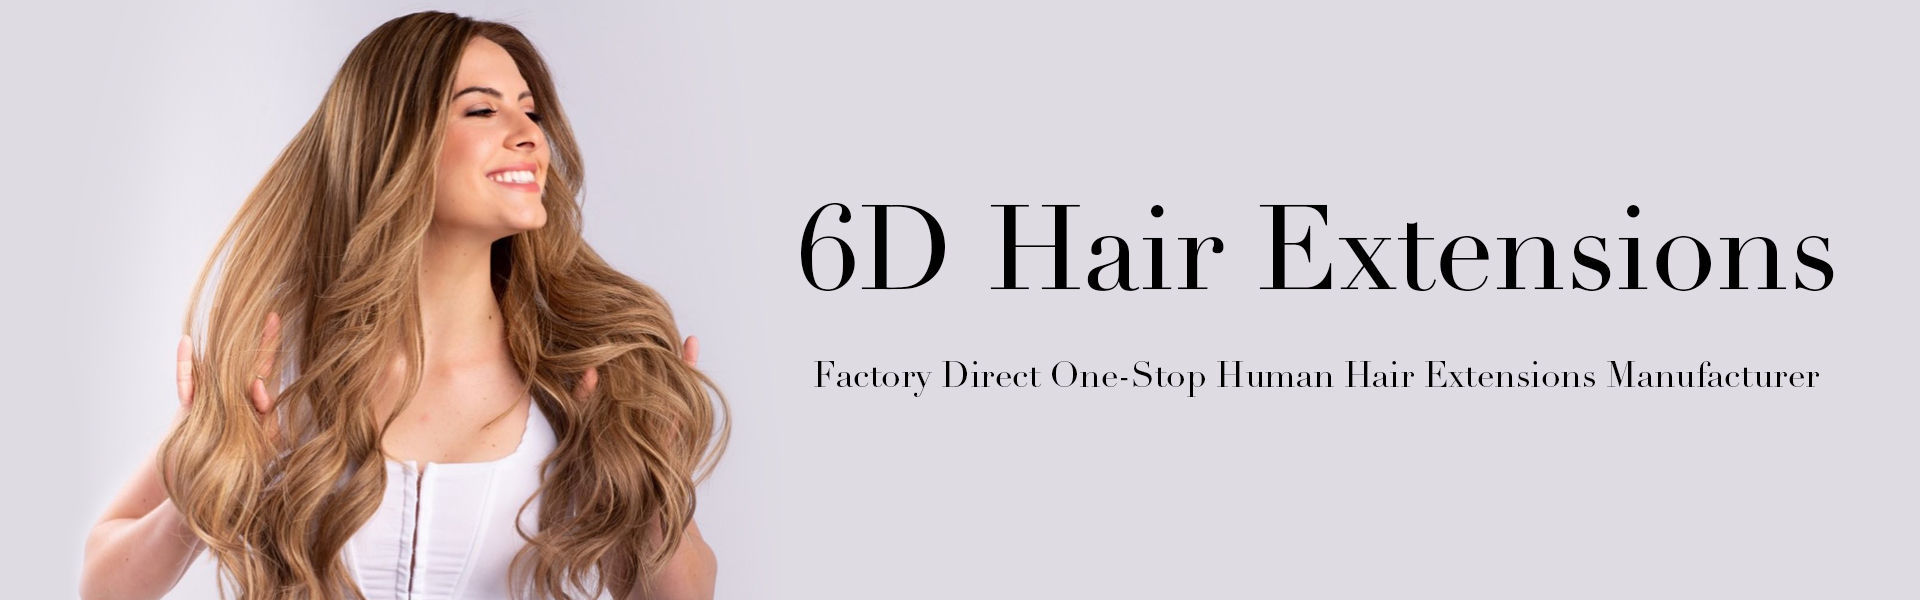 6D Hair Extensions